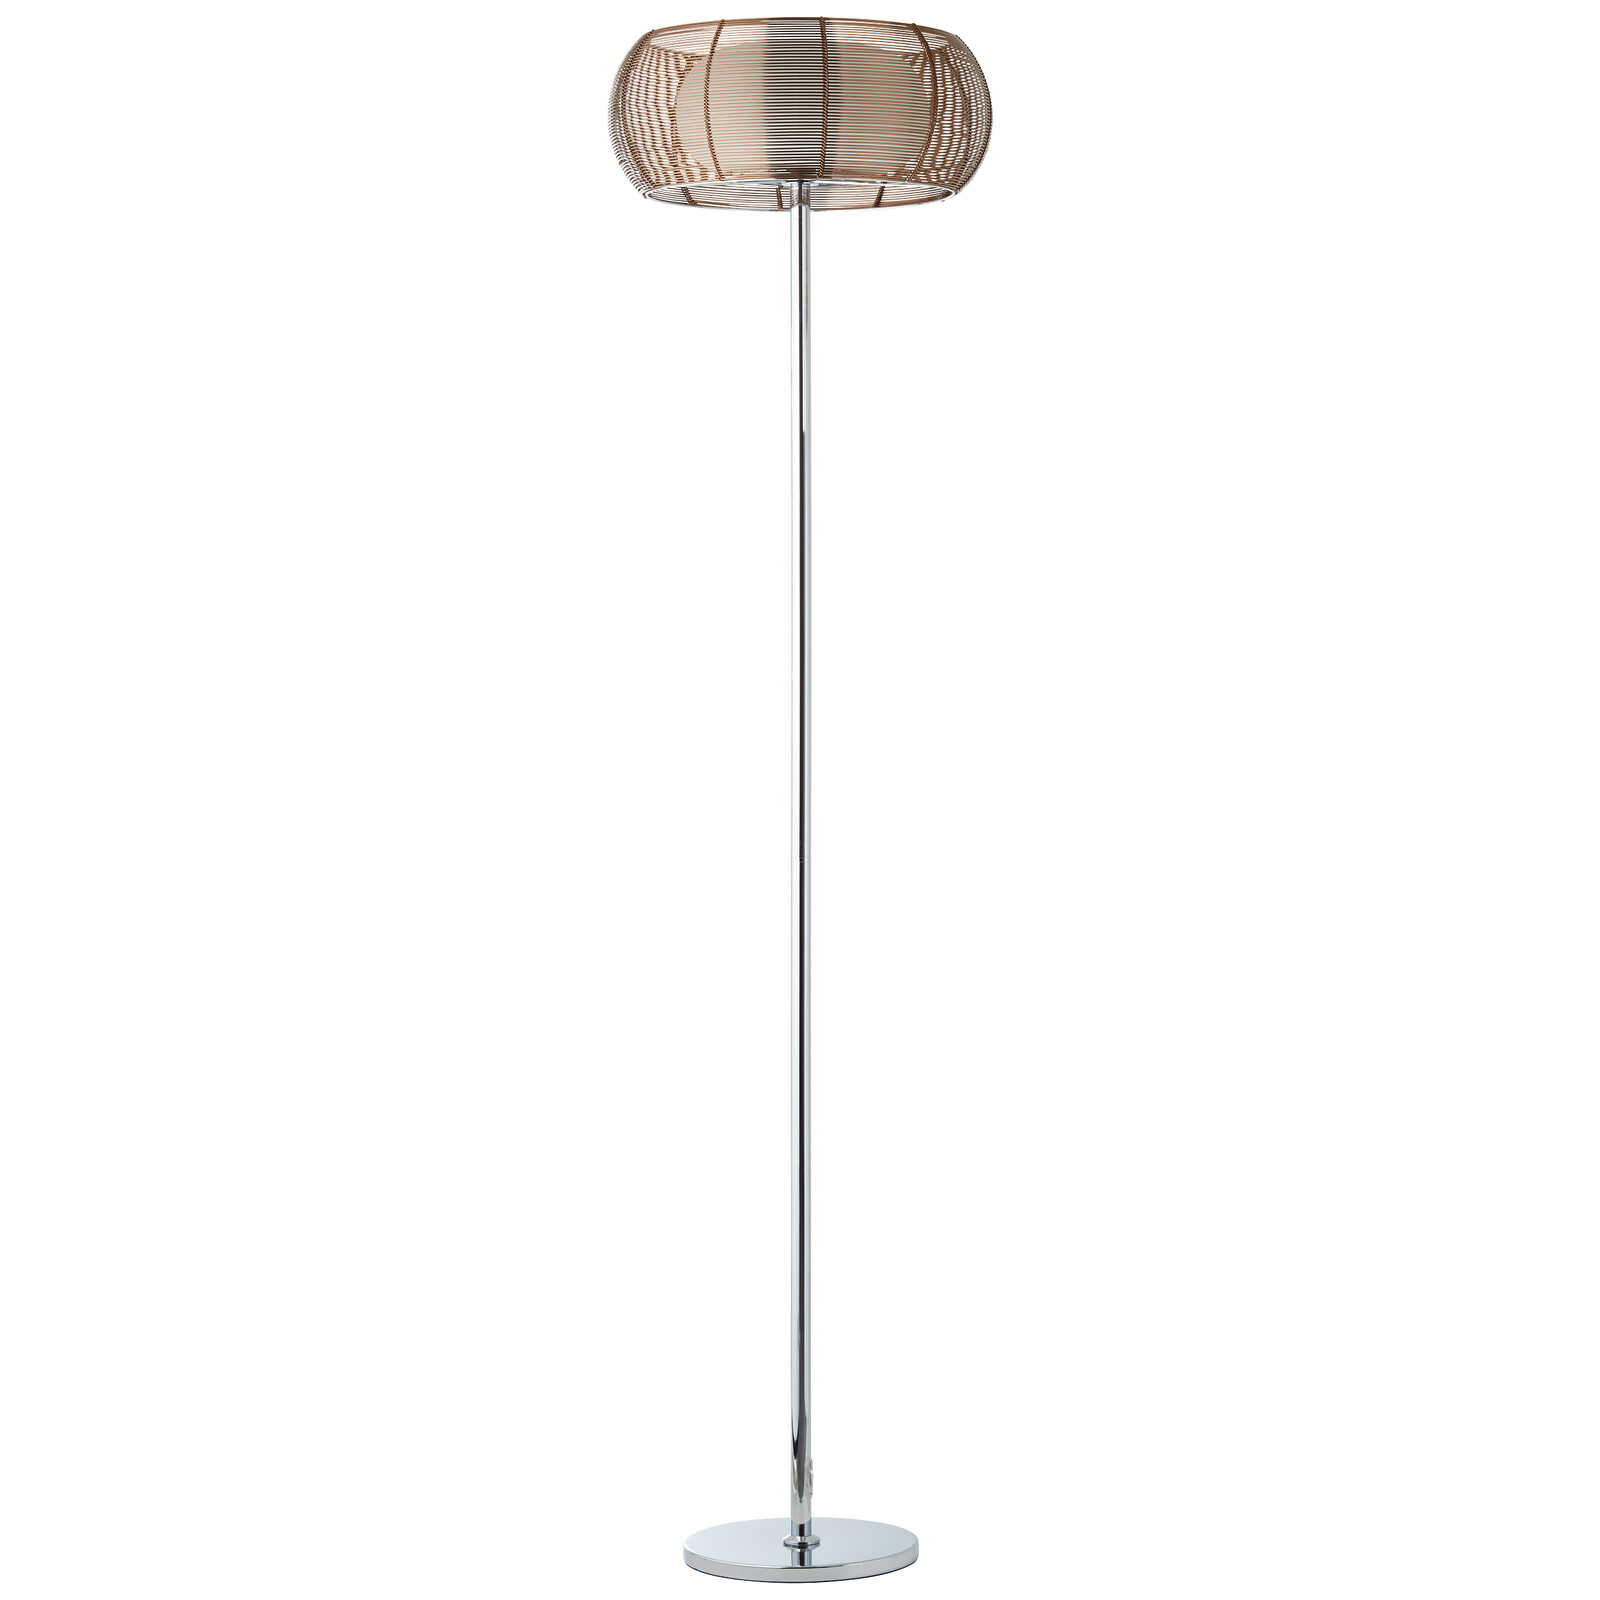             Glass floor lamp - Maxime 11 - Brown
        